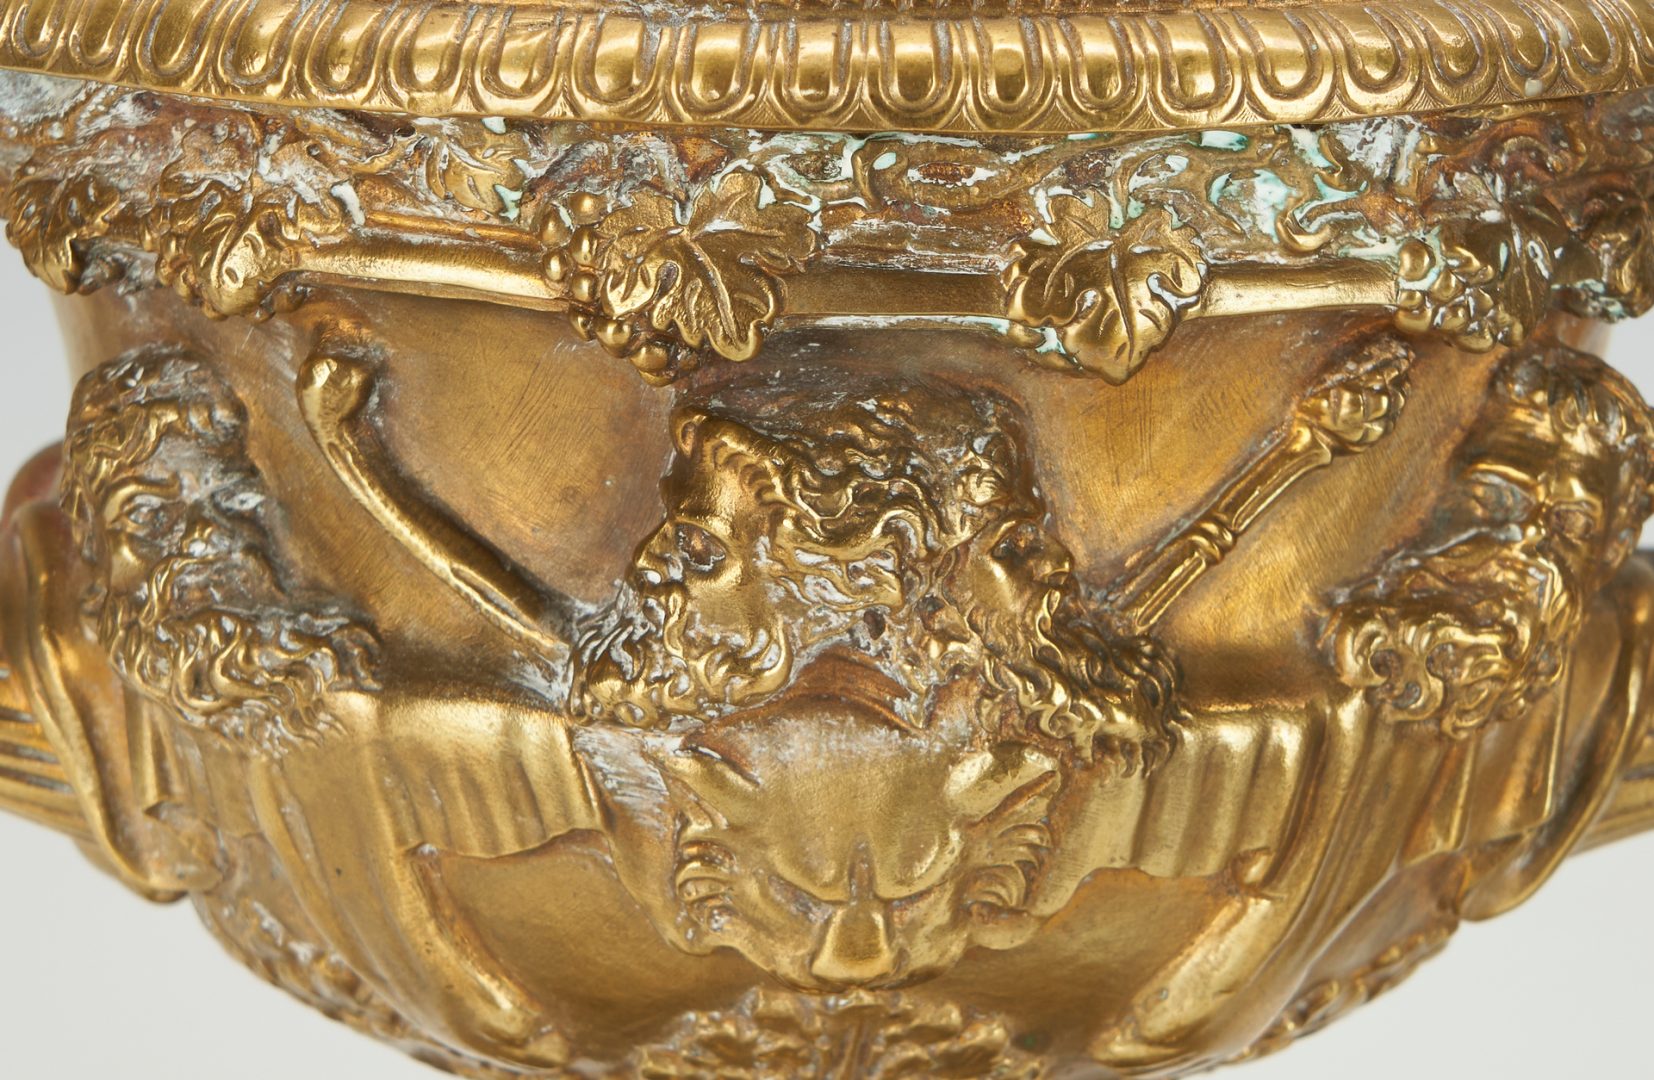 Lot 120: 3 Gilt Decorative Items, incl. Grand Tour Warwick Style Vase, Tobacco Box, & Figural Lamp